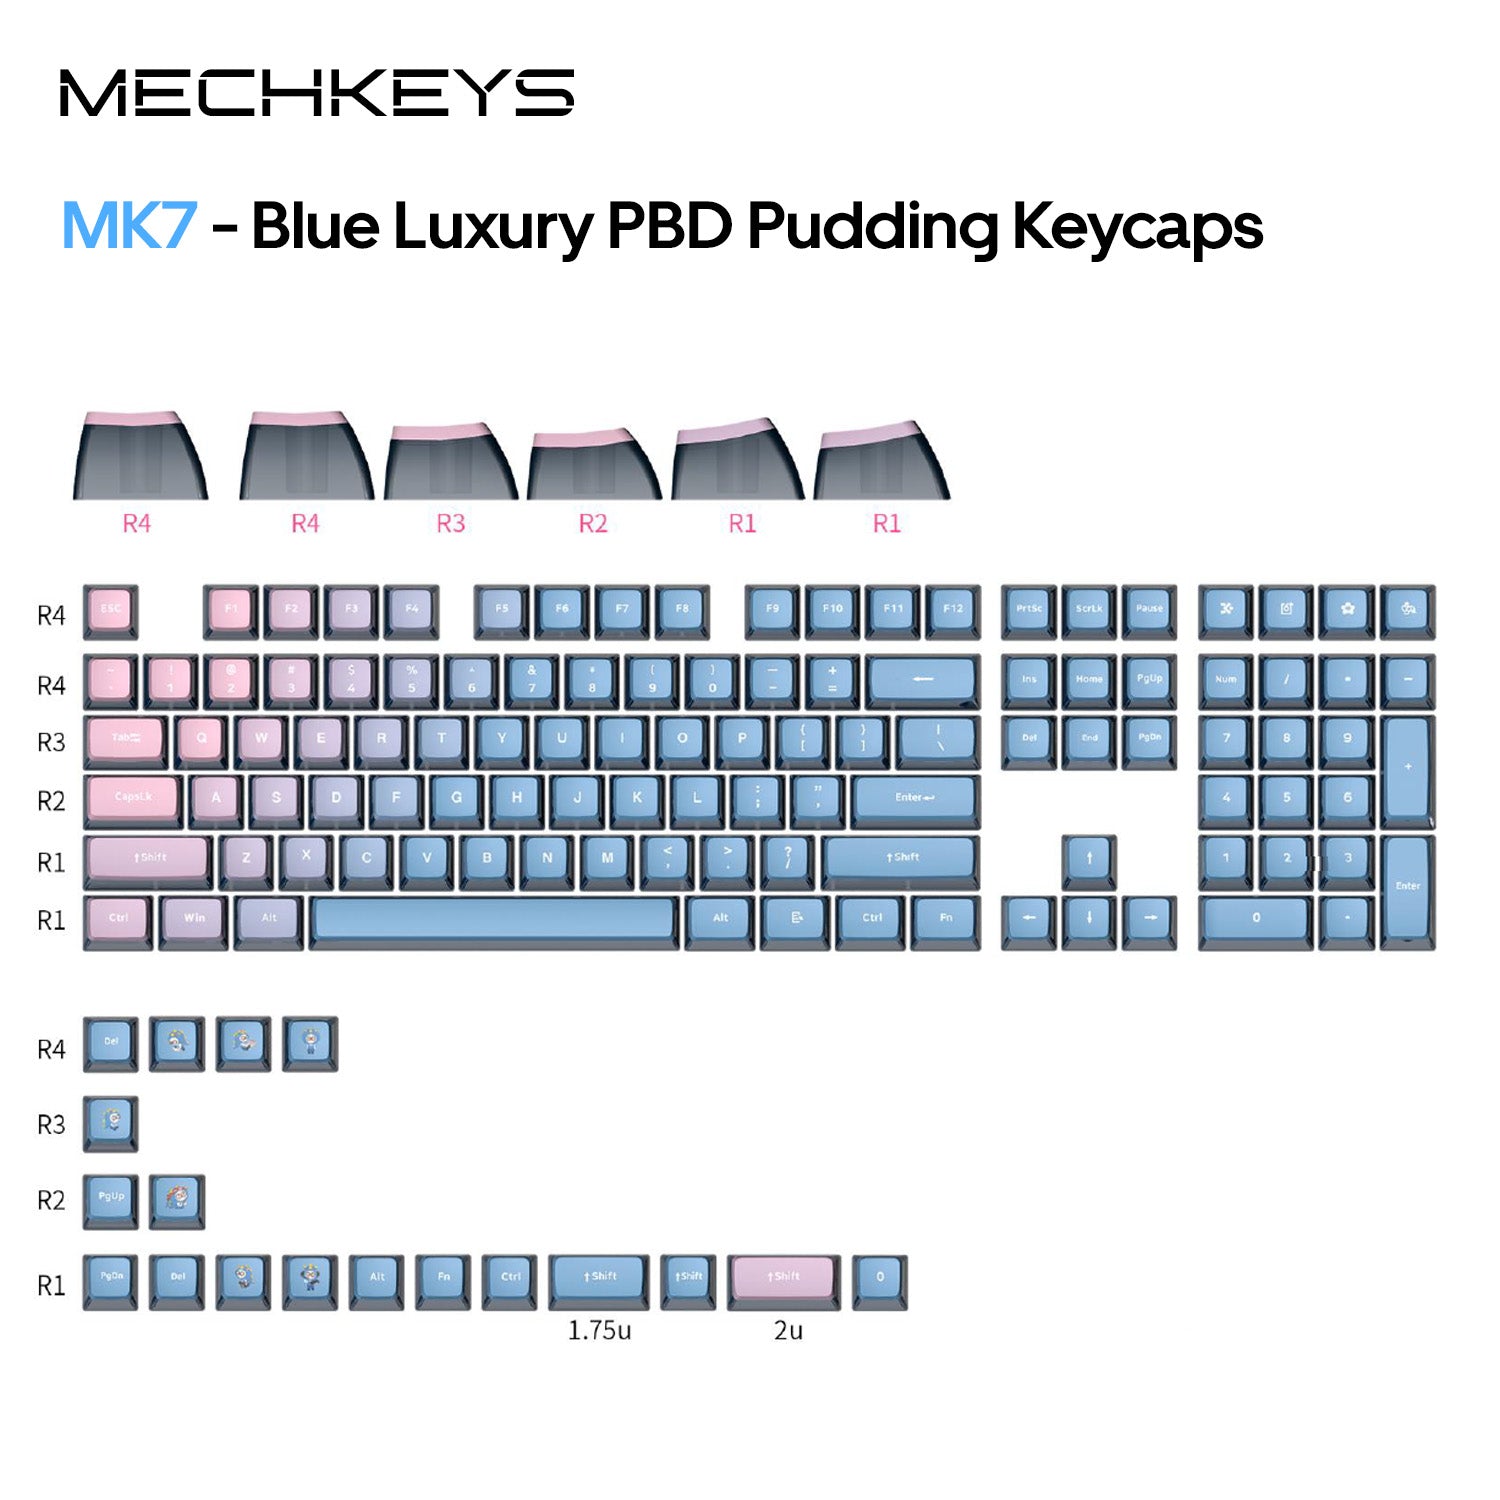 OVERCLOCK MECHKEYS Blue Luxury PBT Pudding Keycaps